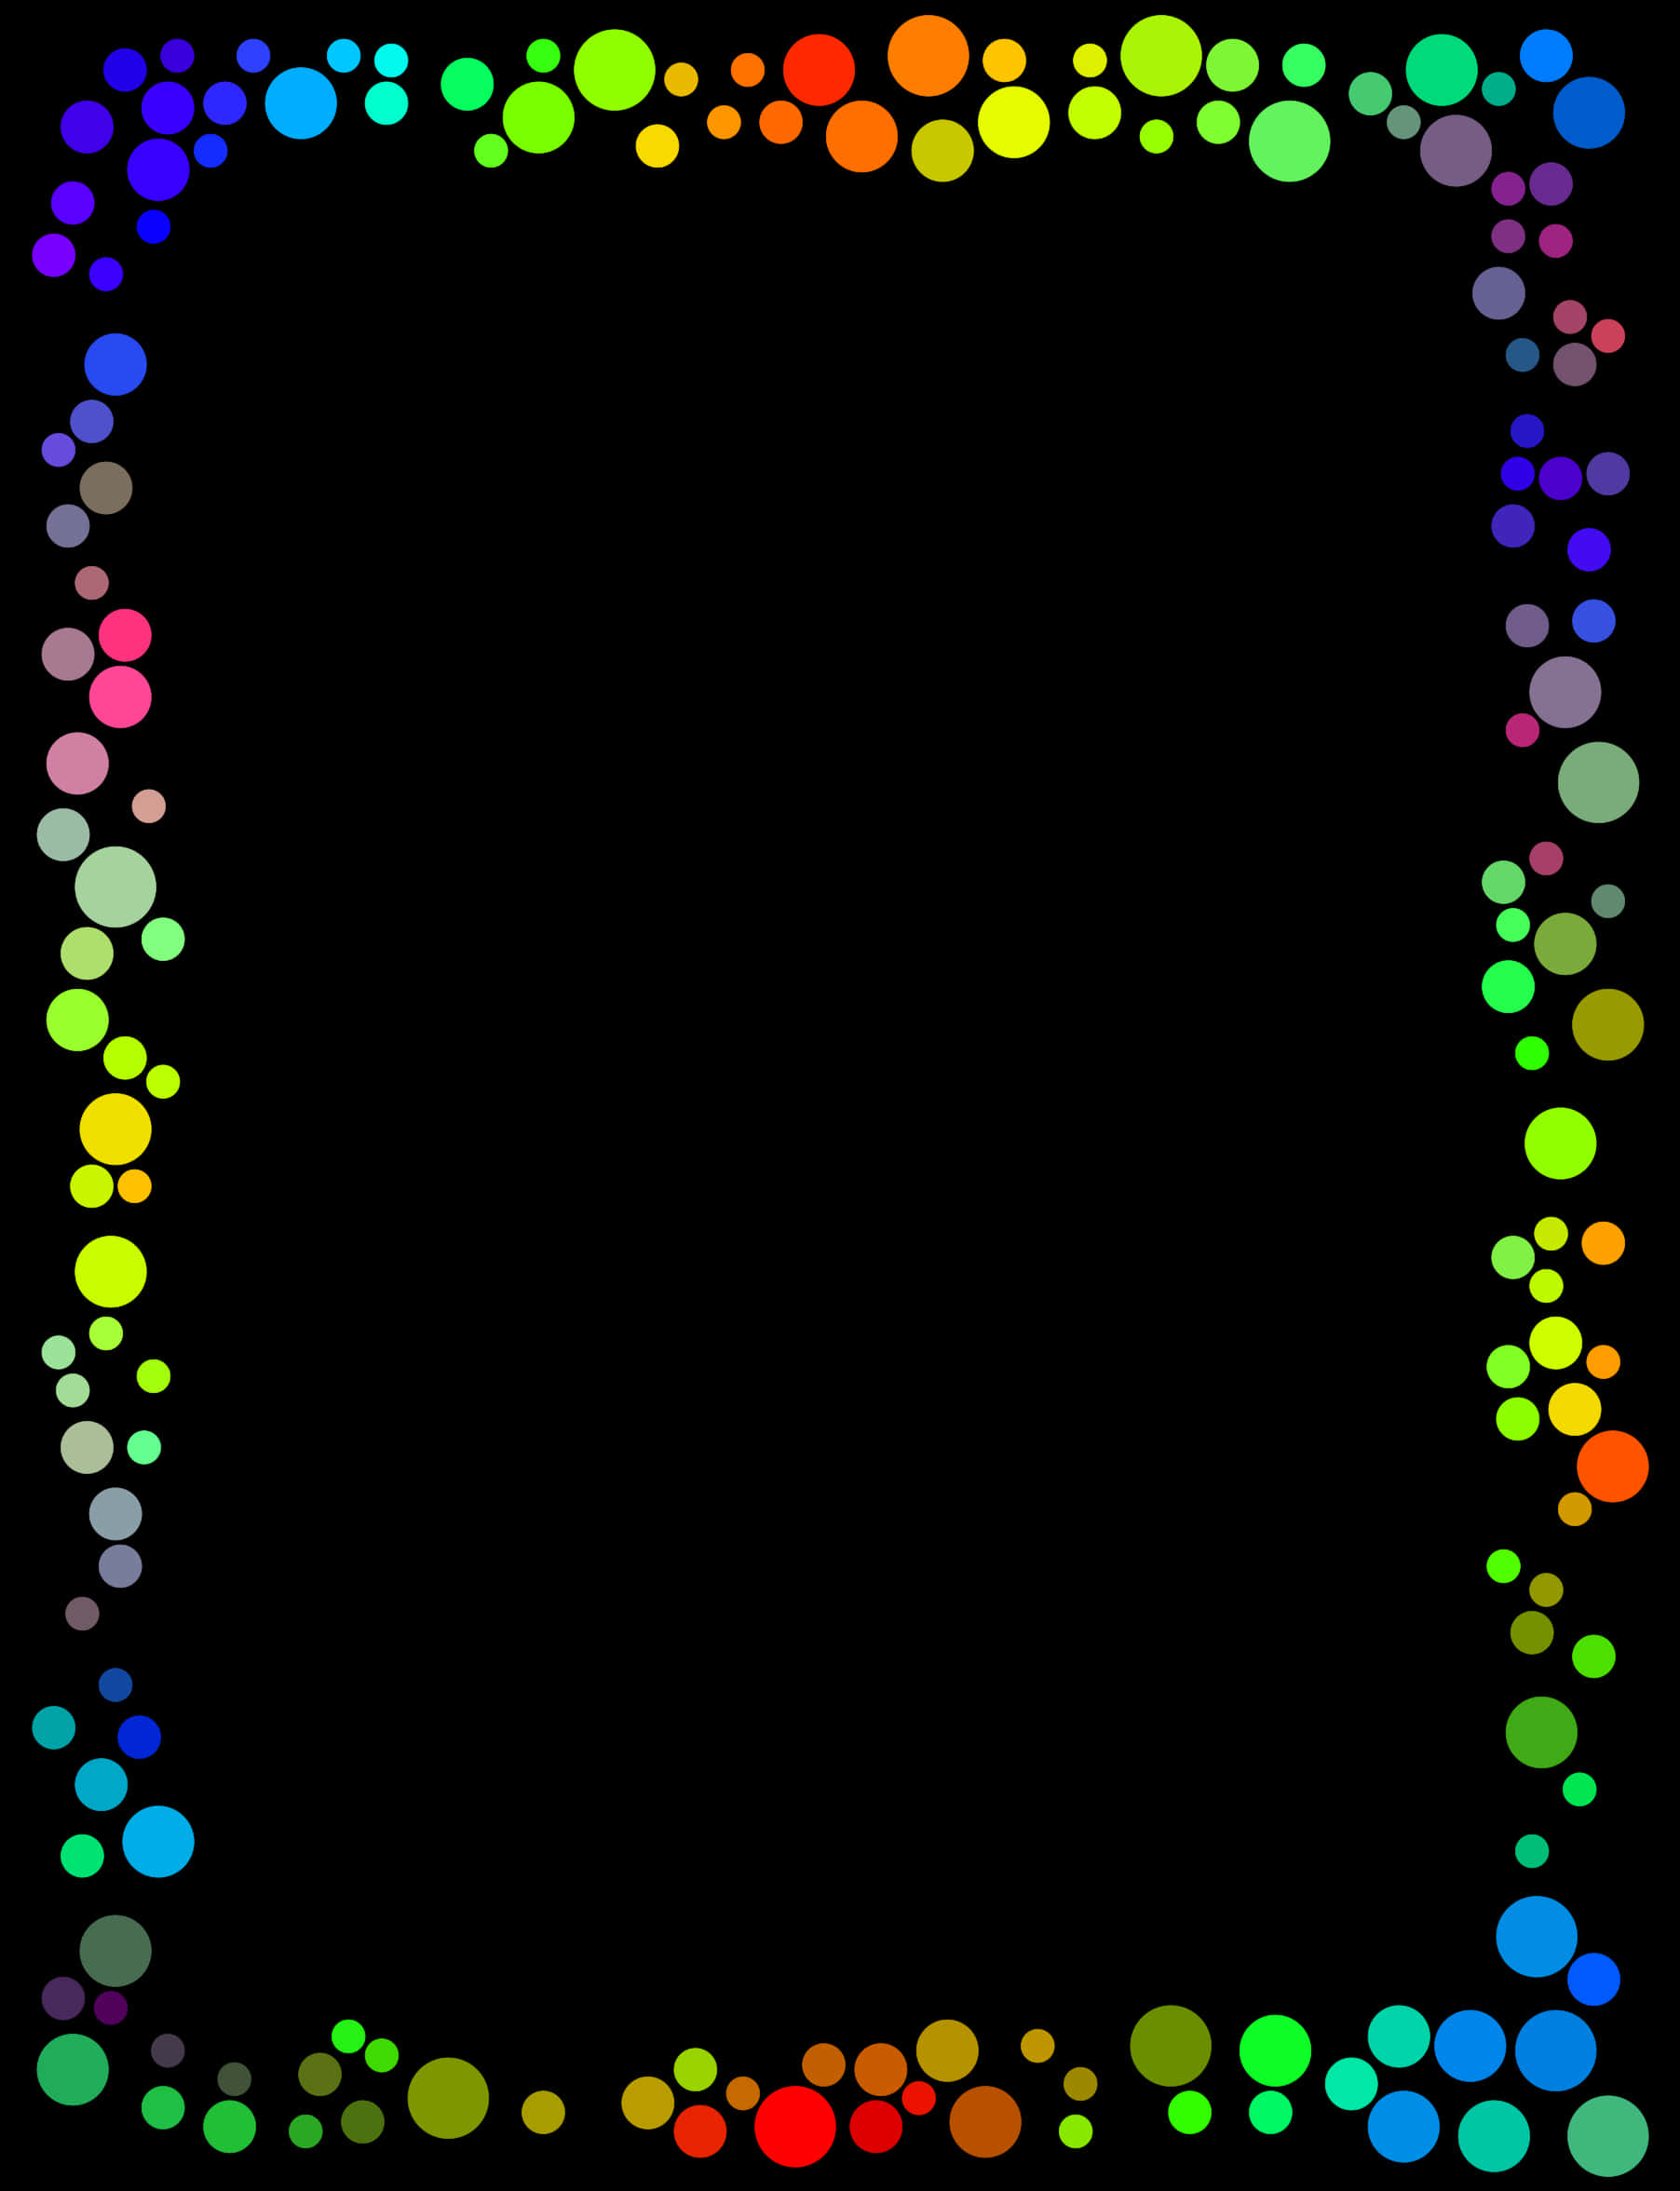 Colorful Dots Border Design